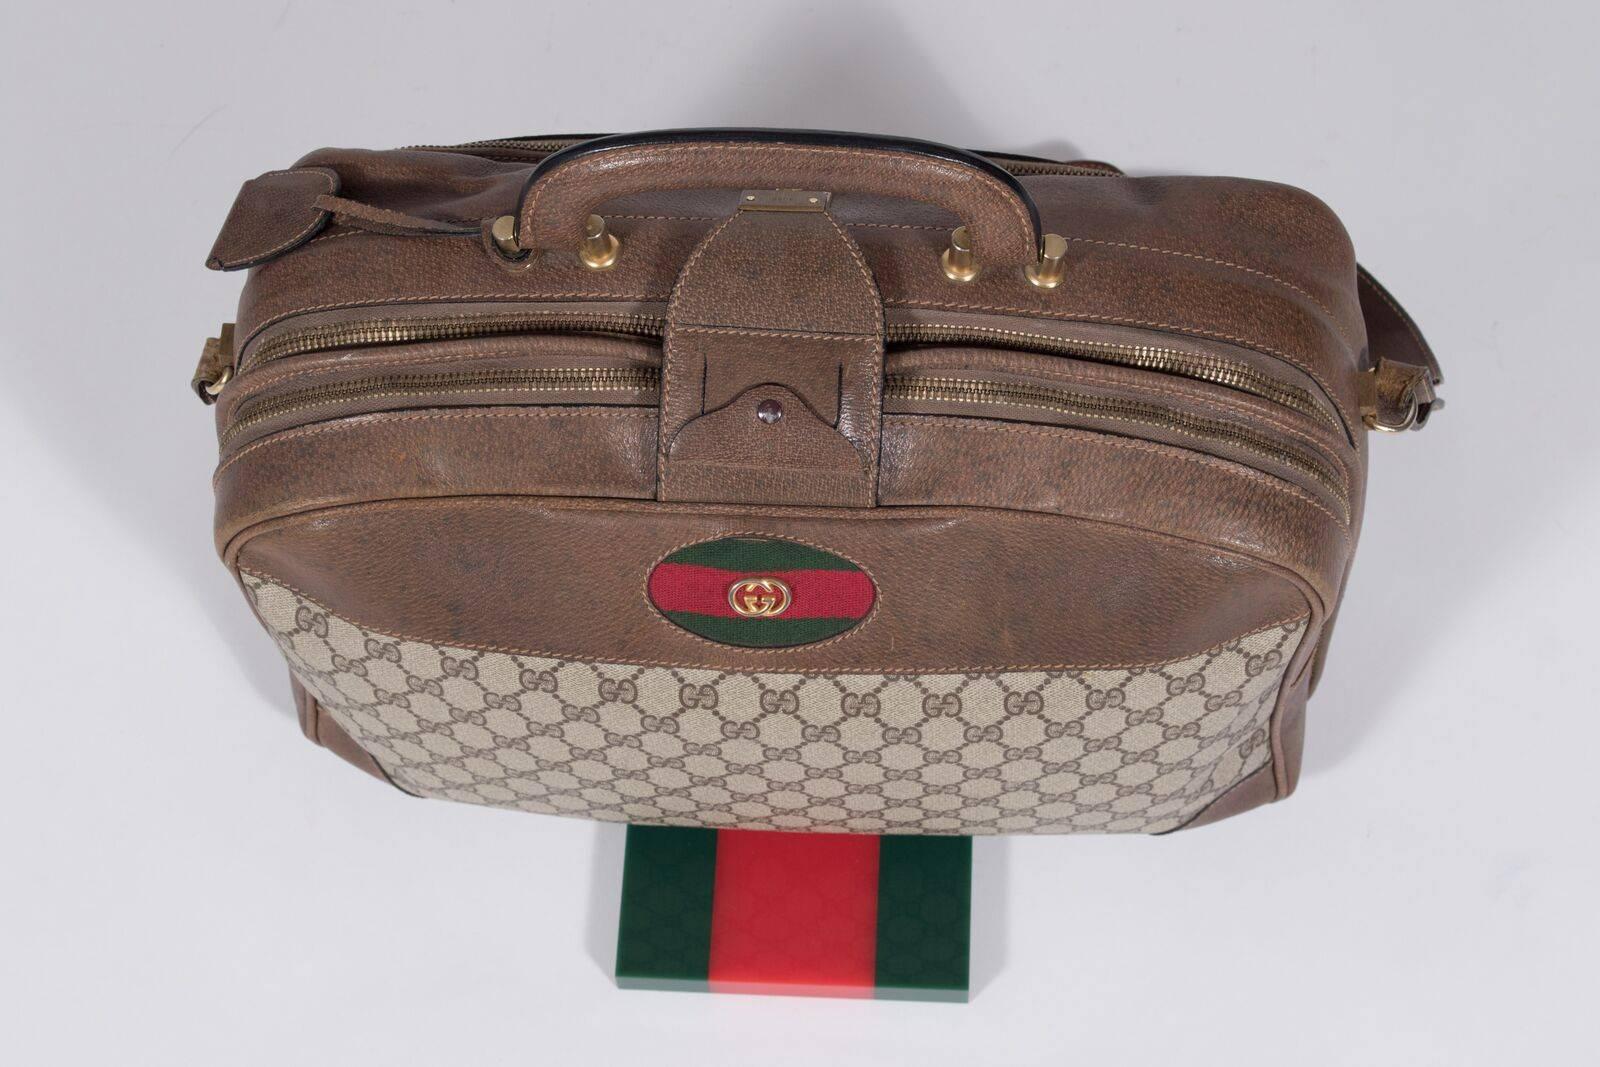 Gucci overnight bag with shoulder strap.
 
-Measurements-
length: 17